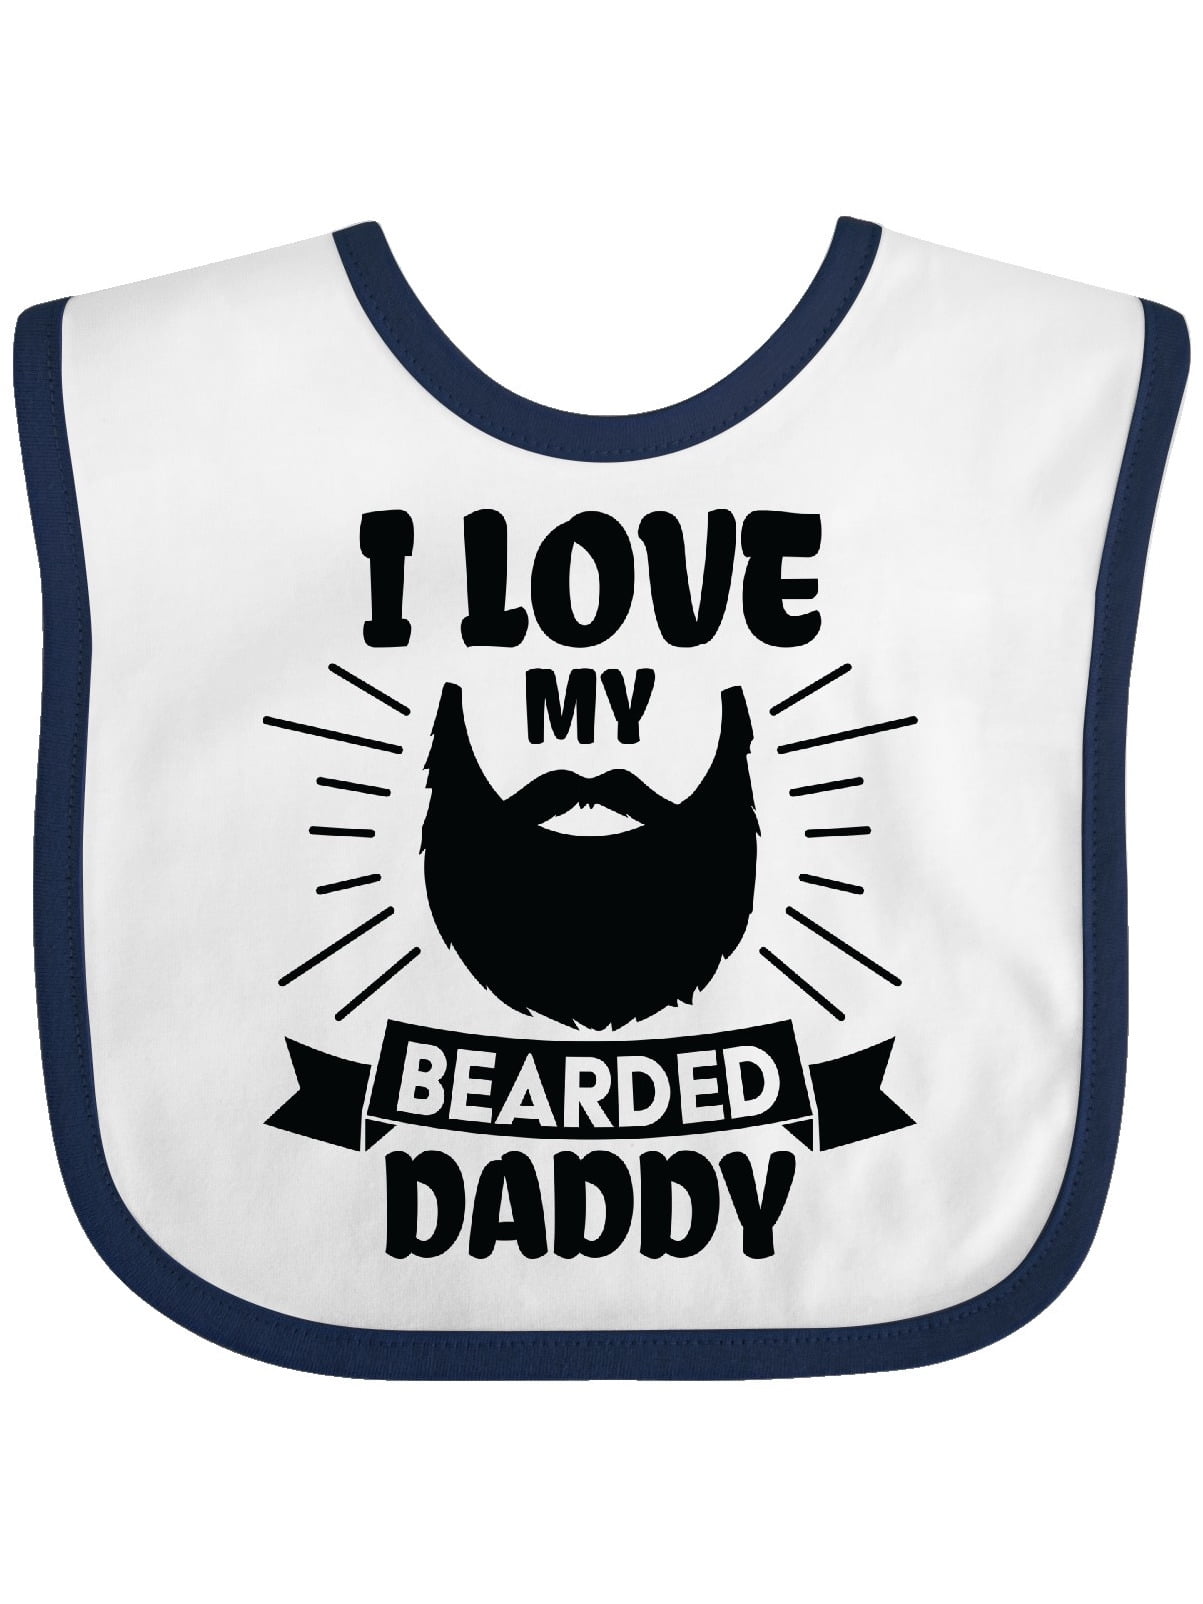 Download I Love My Bearded Daddy with Beard Silhouette Baby Bib ...